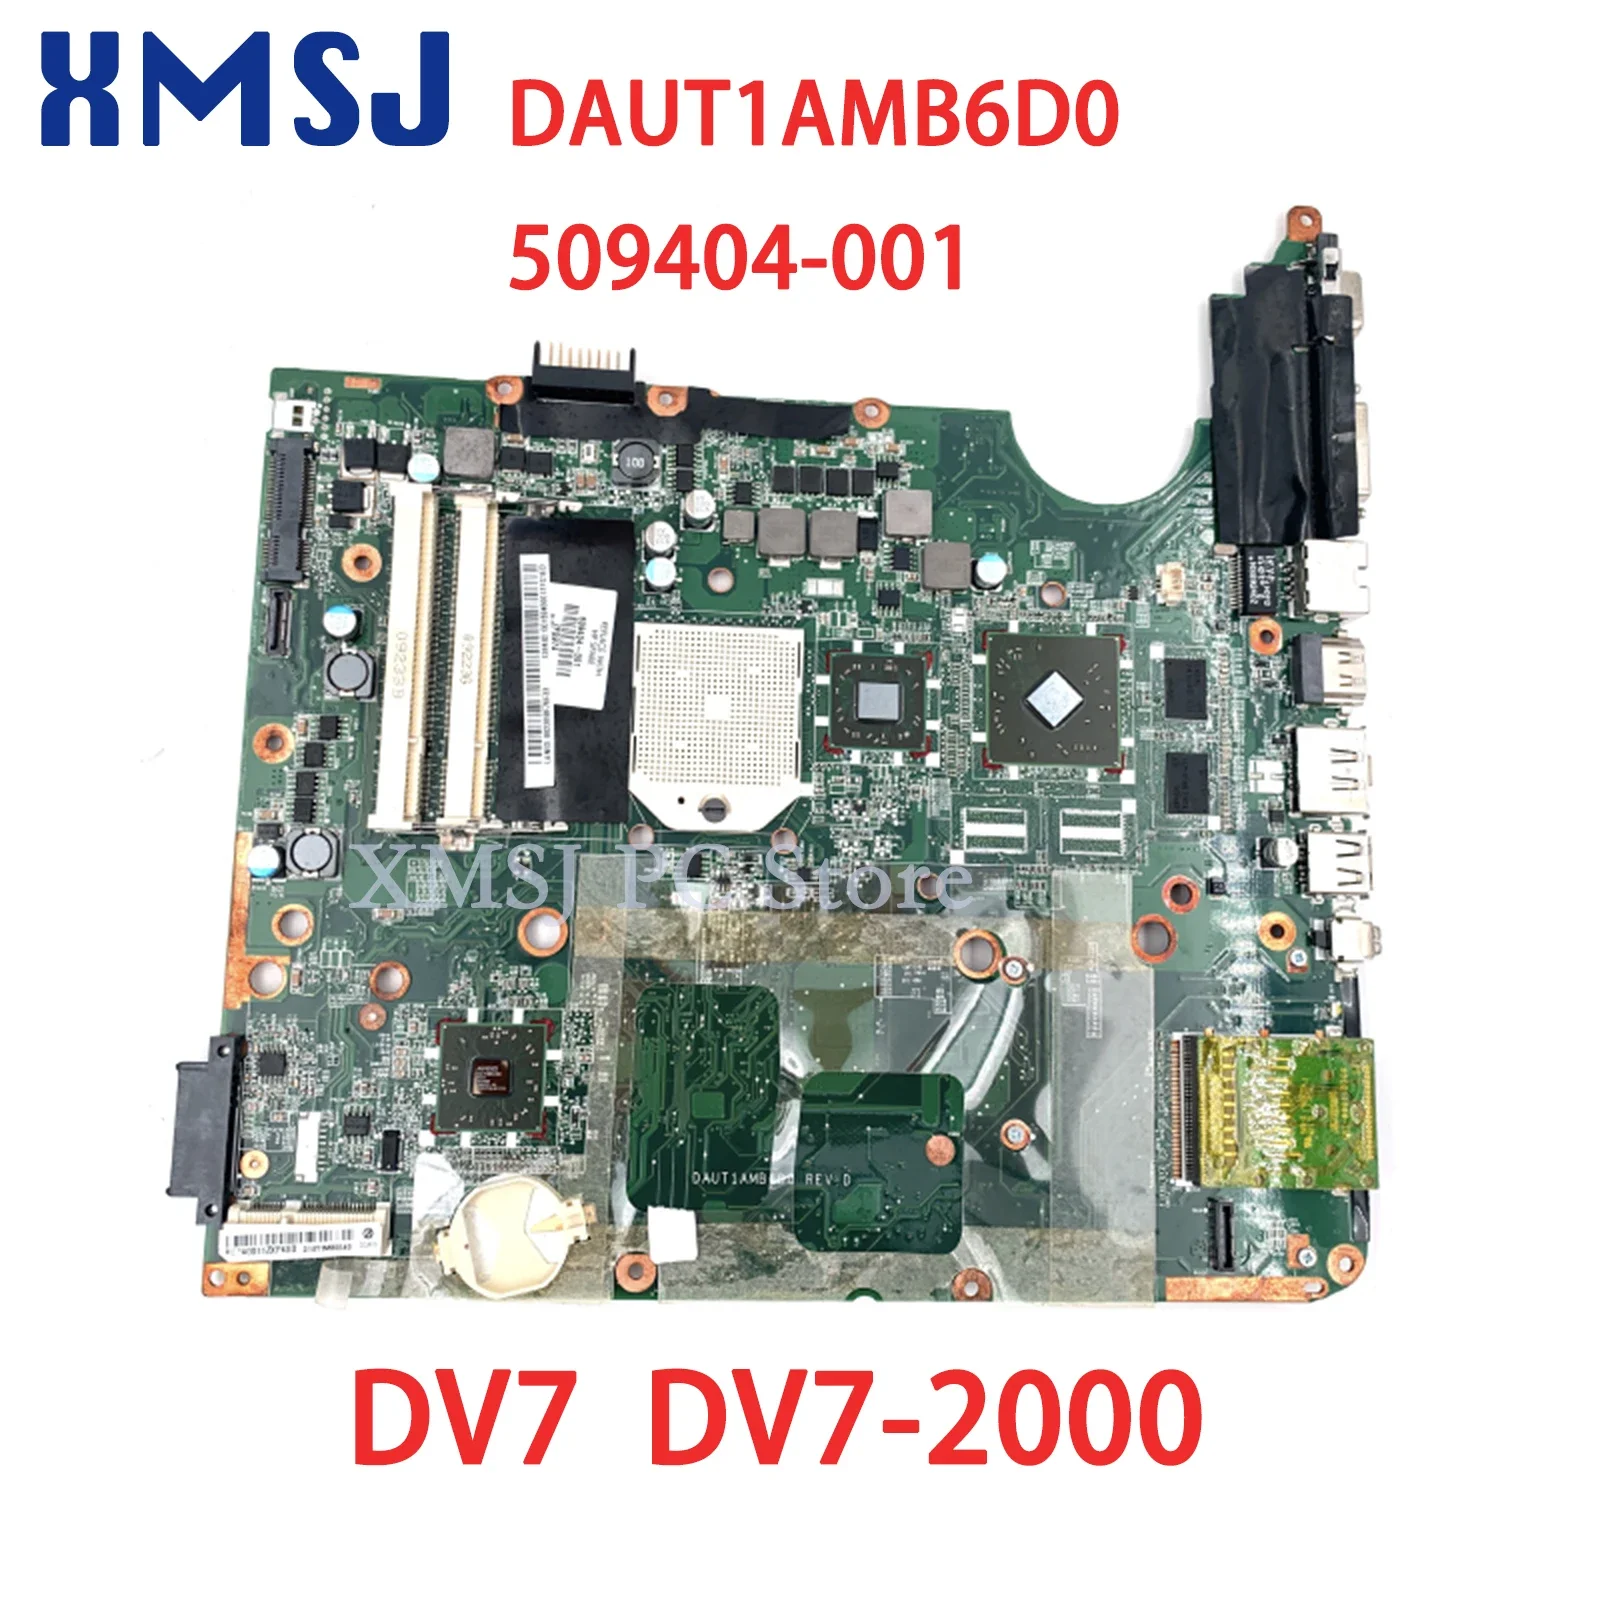 

XMSJ For HP Pavilion DV7 DV7-2000 Laptop Motherboard DAUT1AMB6D0 509404-001 Socket S1 DDR2 512MB GPU Free CPU Main Board